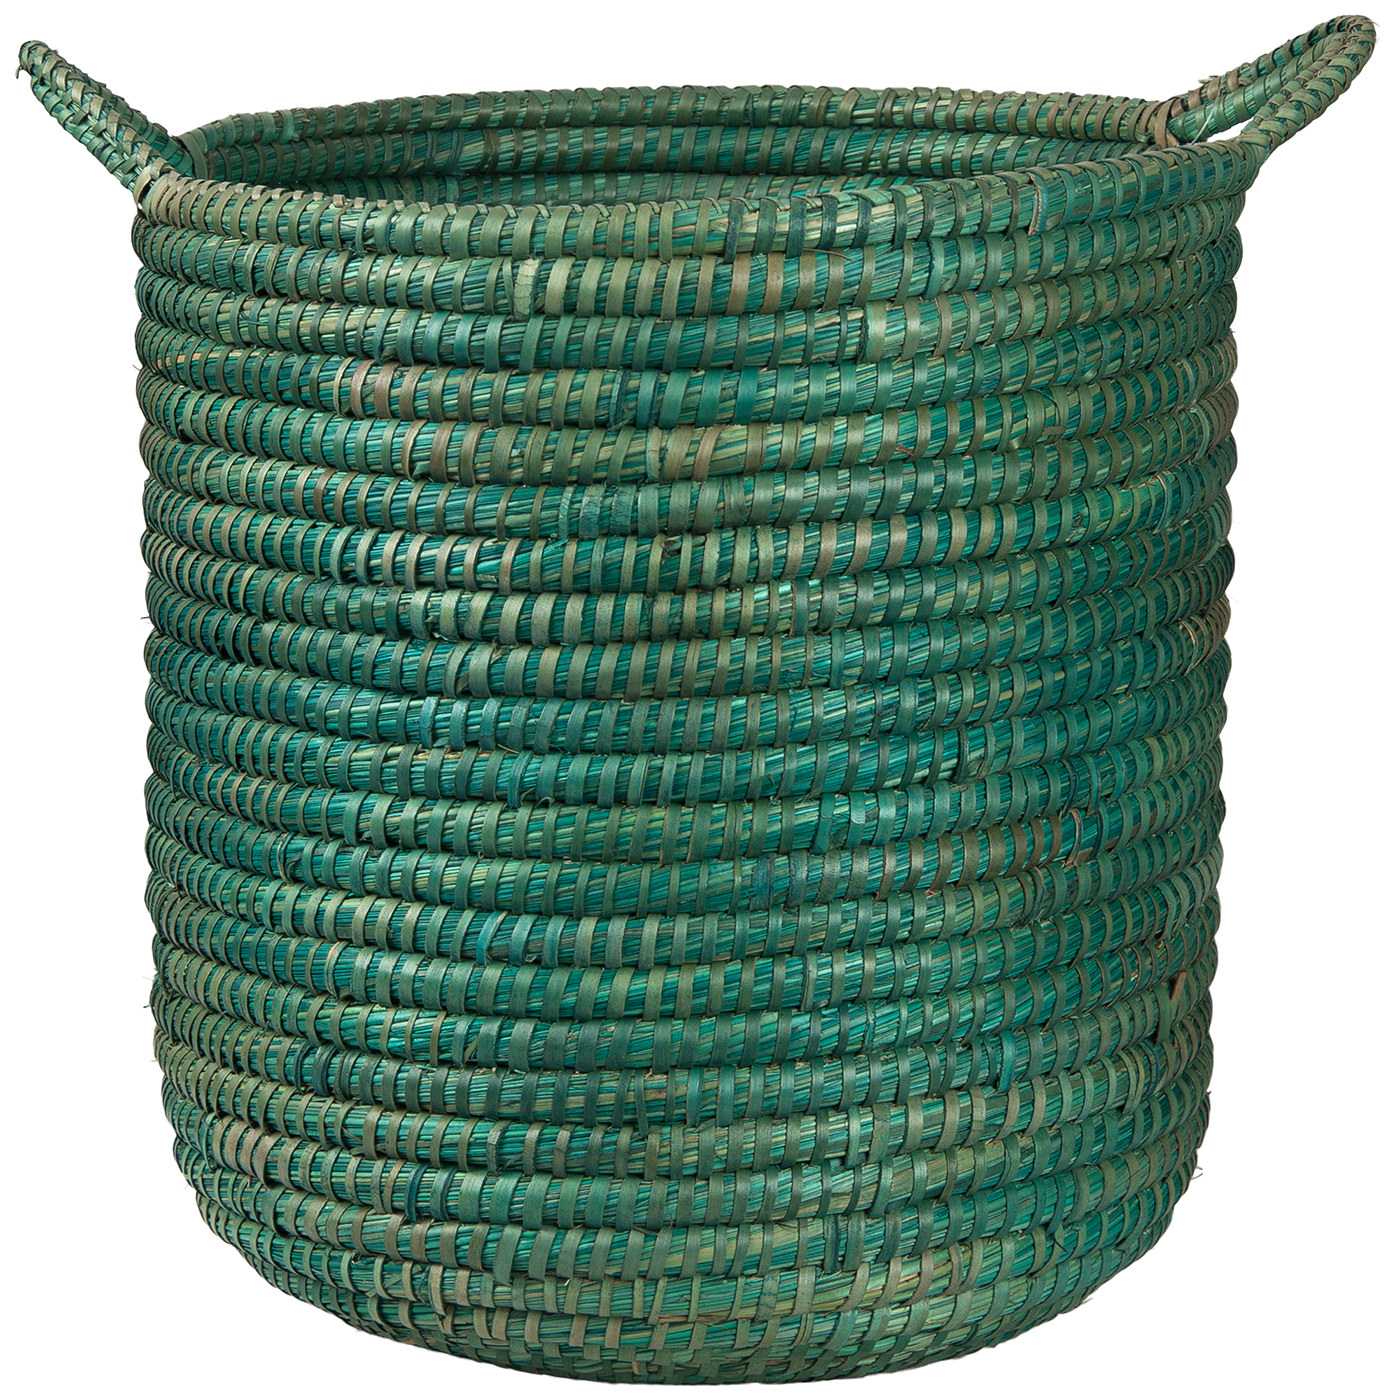 5Q 1099 081 3 – Sea Grass Fruit Basket Cylinder Turquoise M (1)